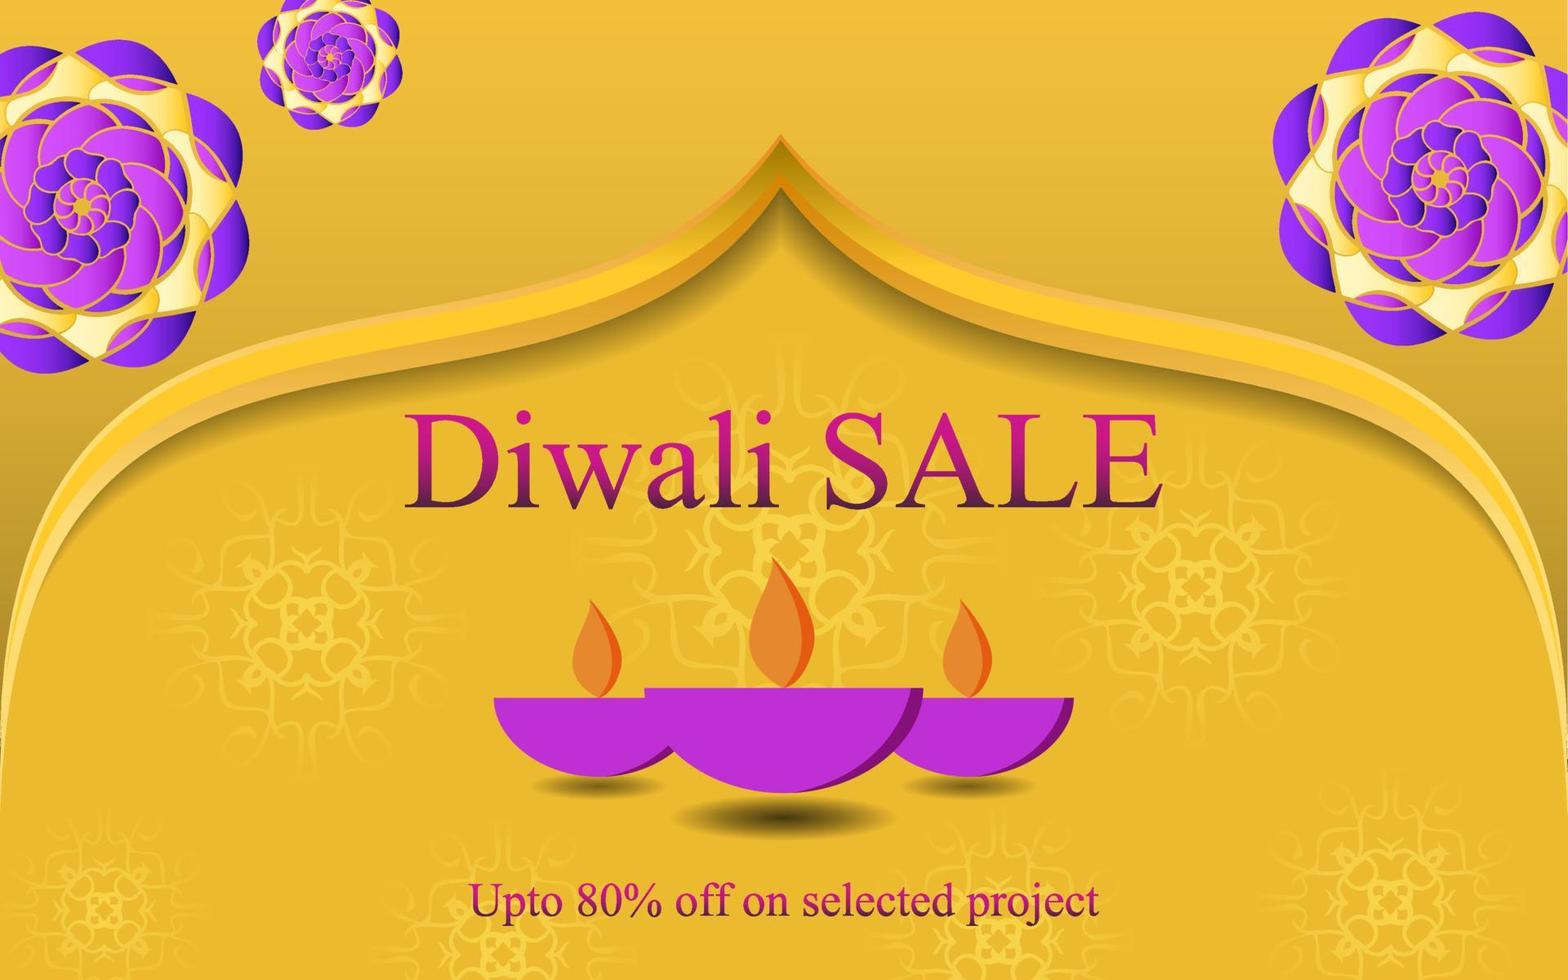 happy diwali - färgglad diwali-försäljningsbanner, glad diwali-försäljningsbanner vektorillustration, vektor